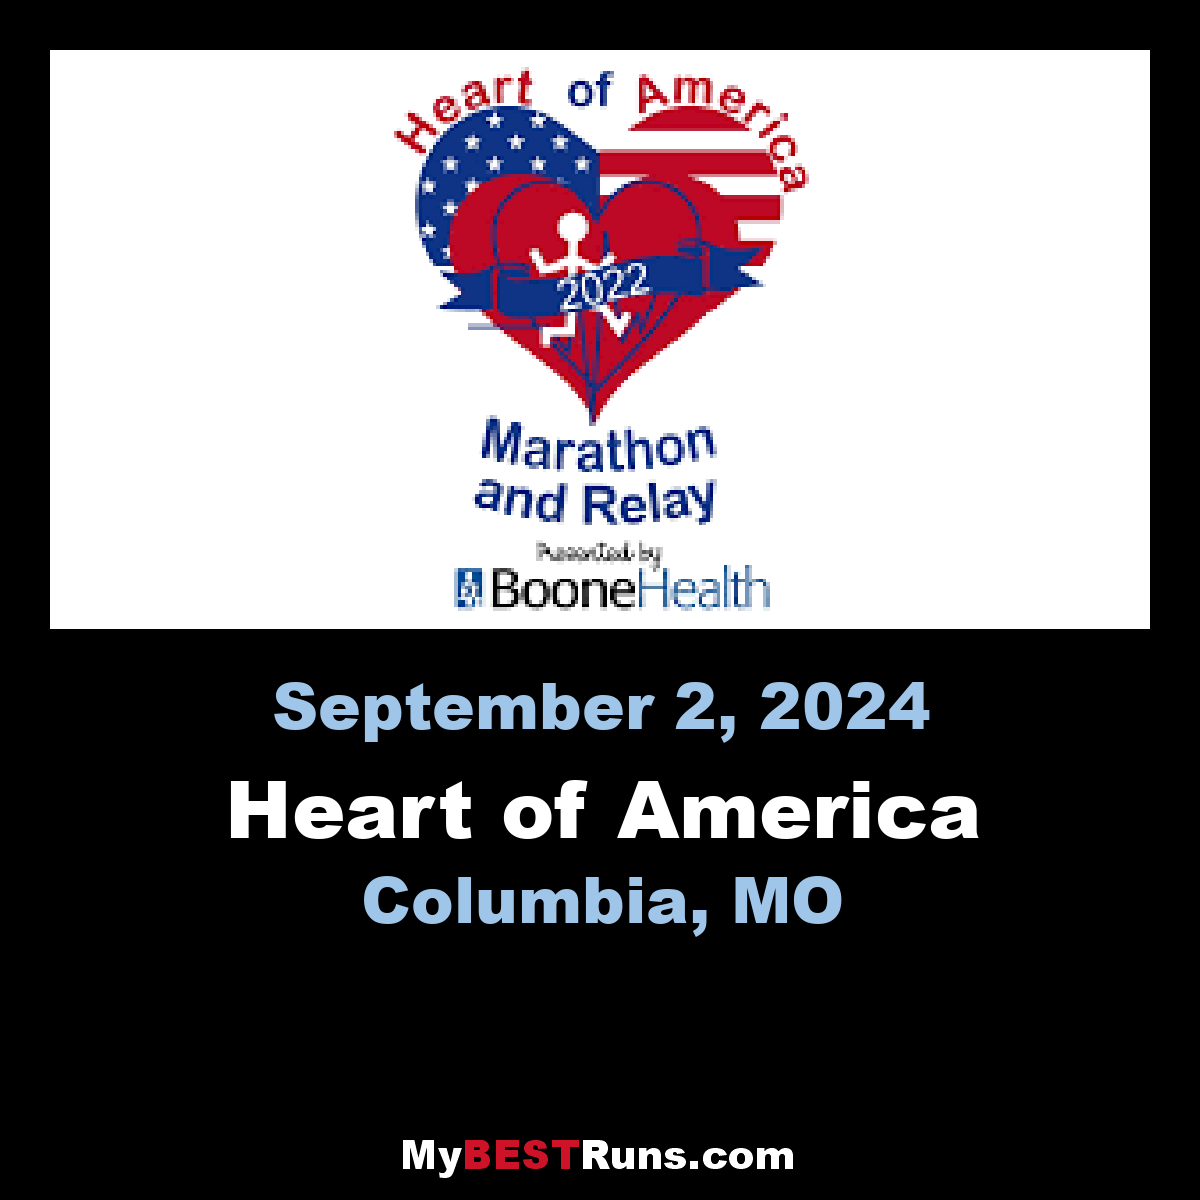 Heart of America Marathon